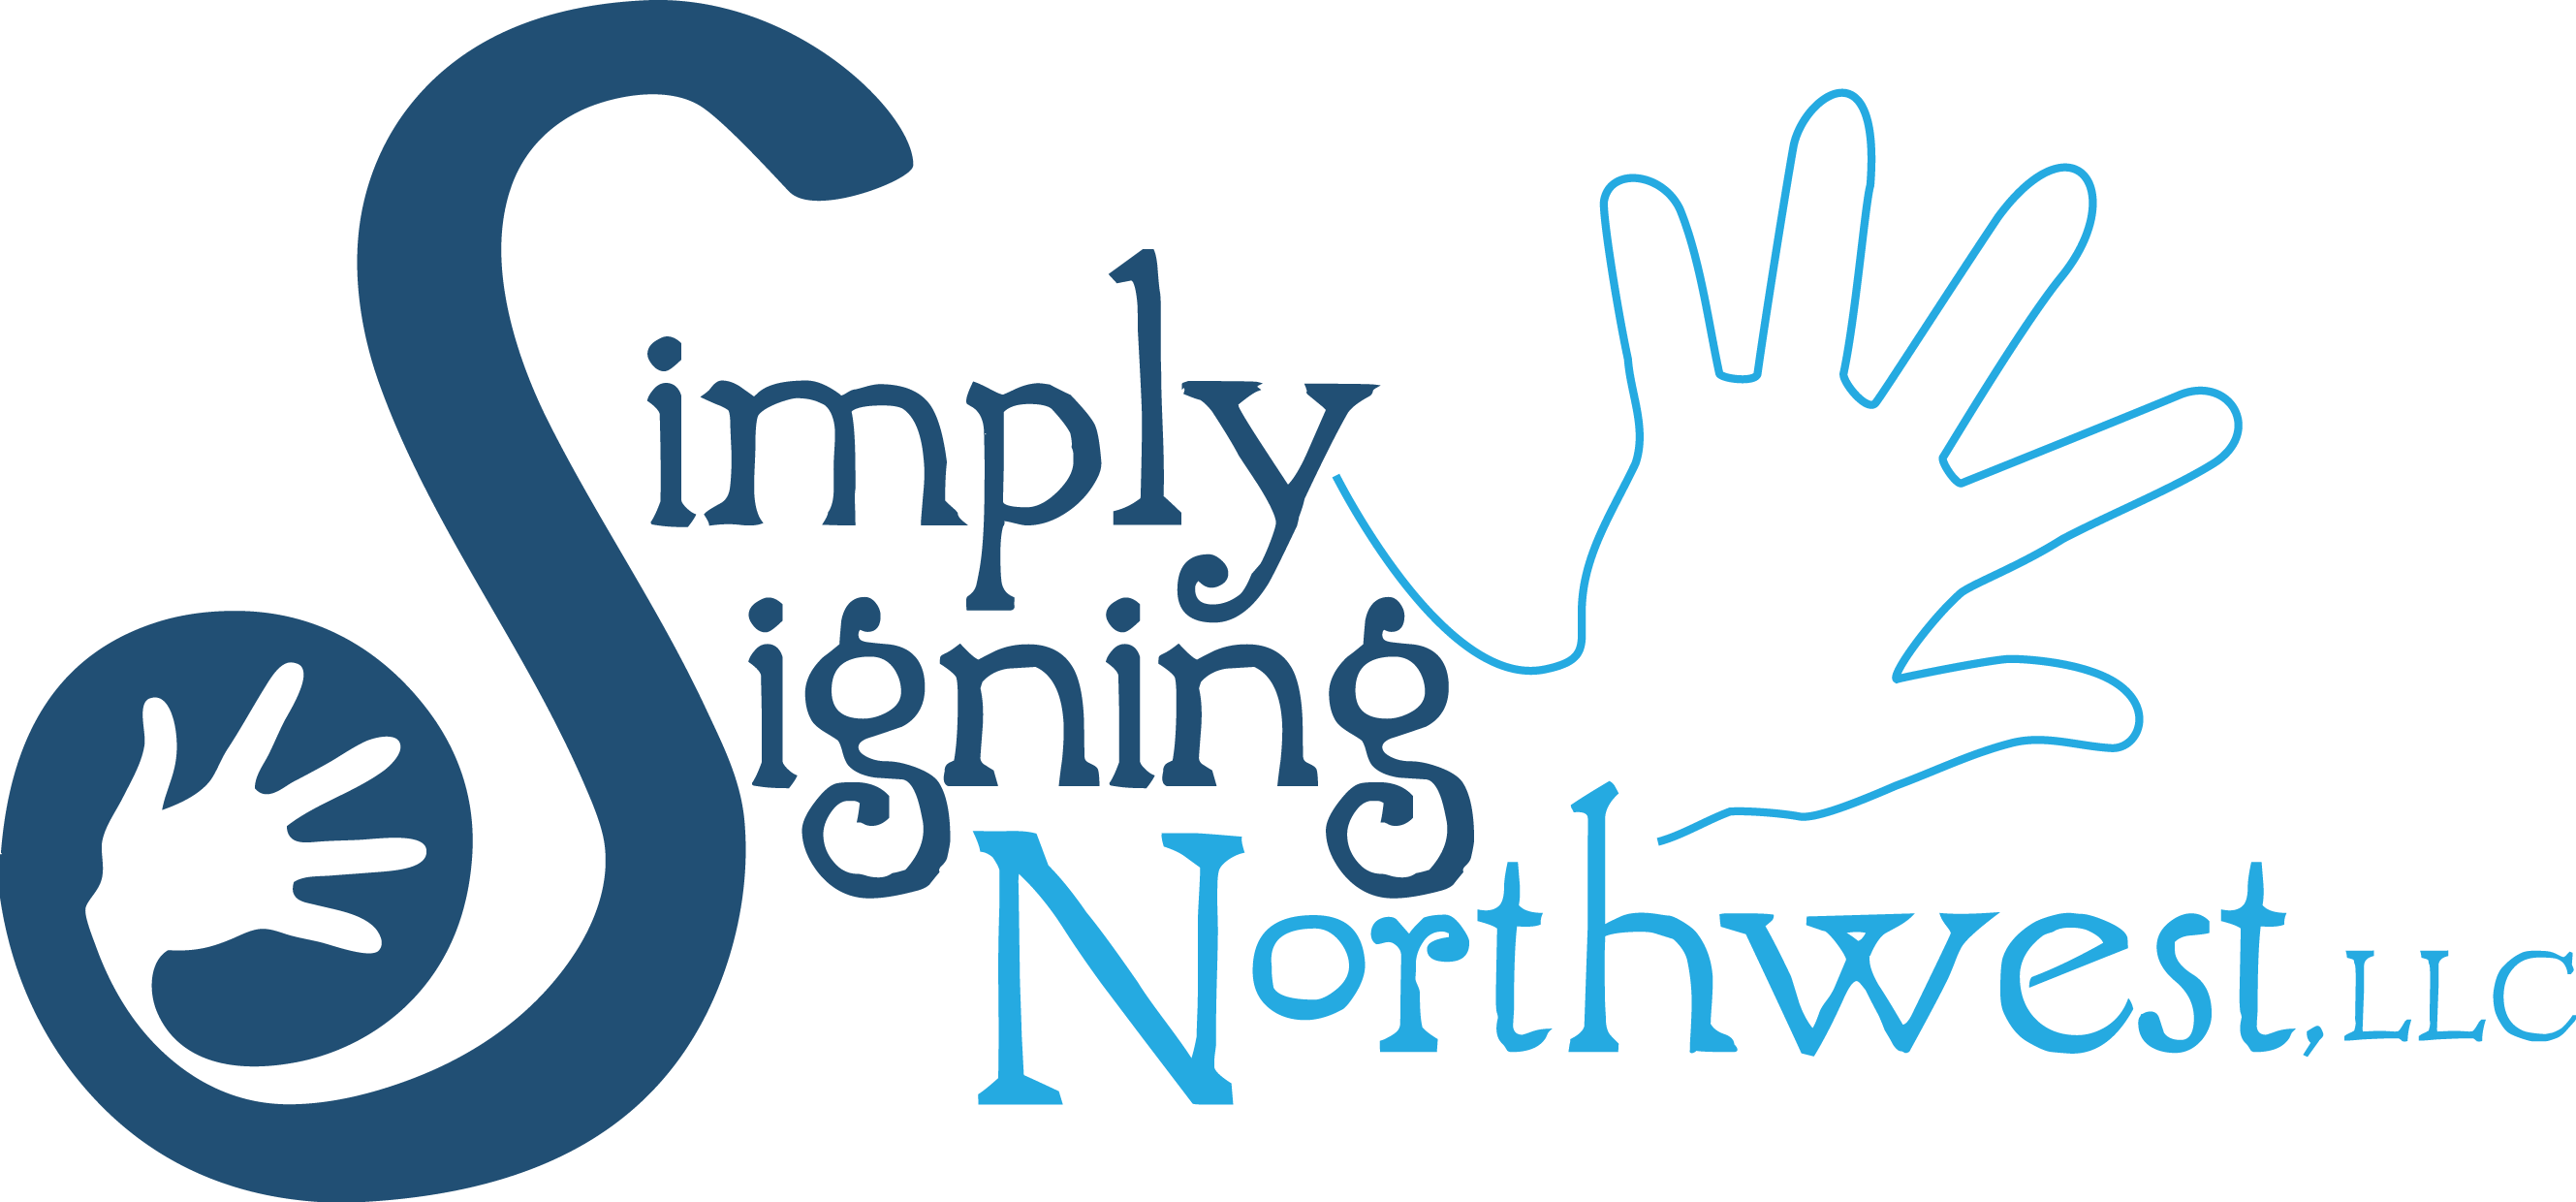 Simply Signing Northwest